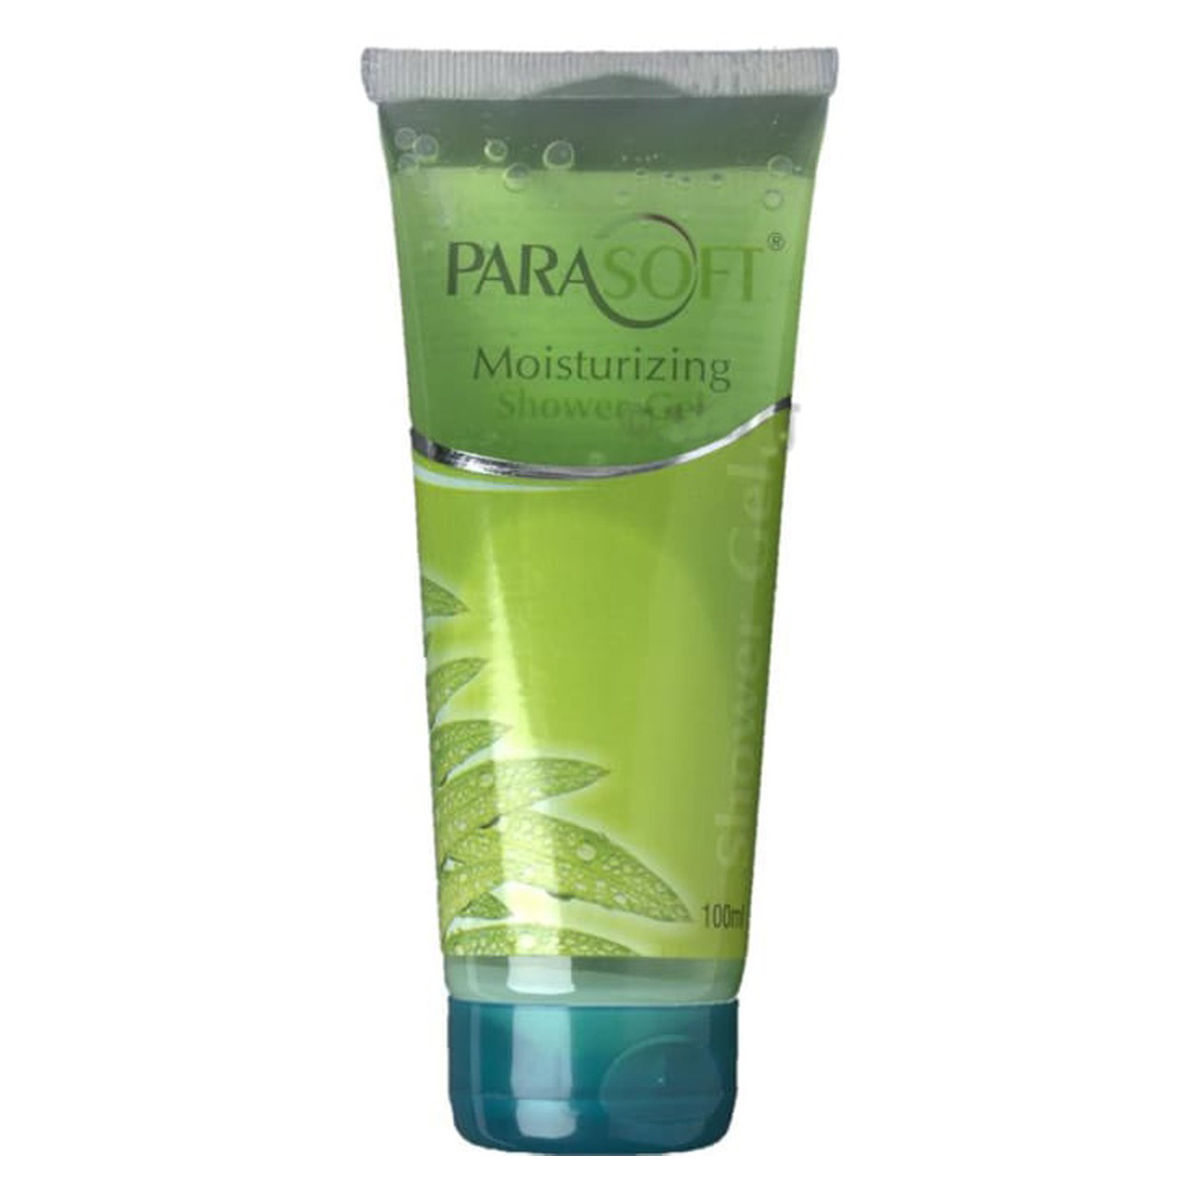 Buy Parasoft Moisturizing Shower Gel, 100 ml Online